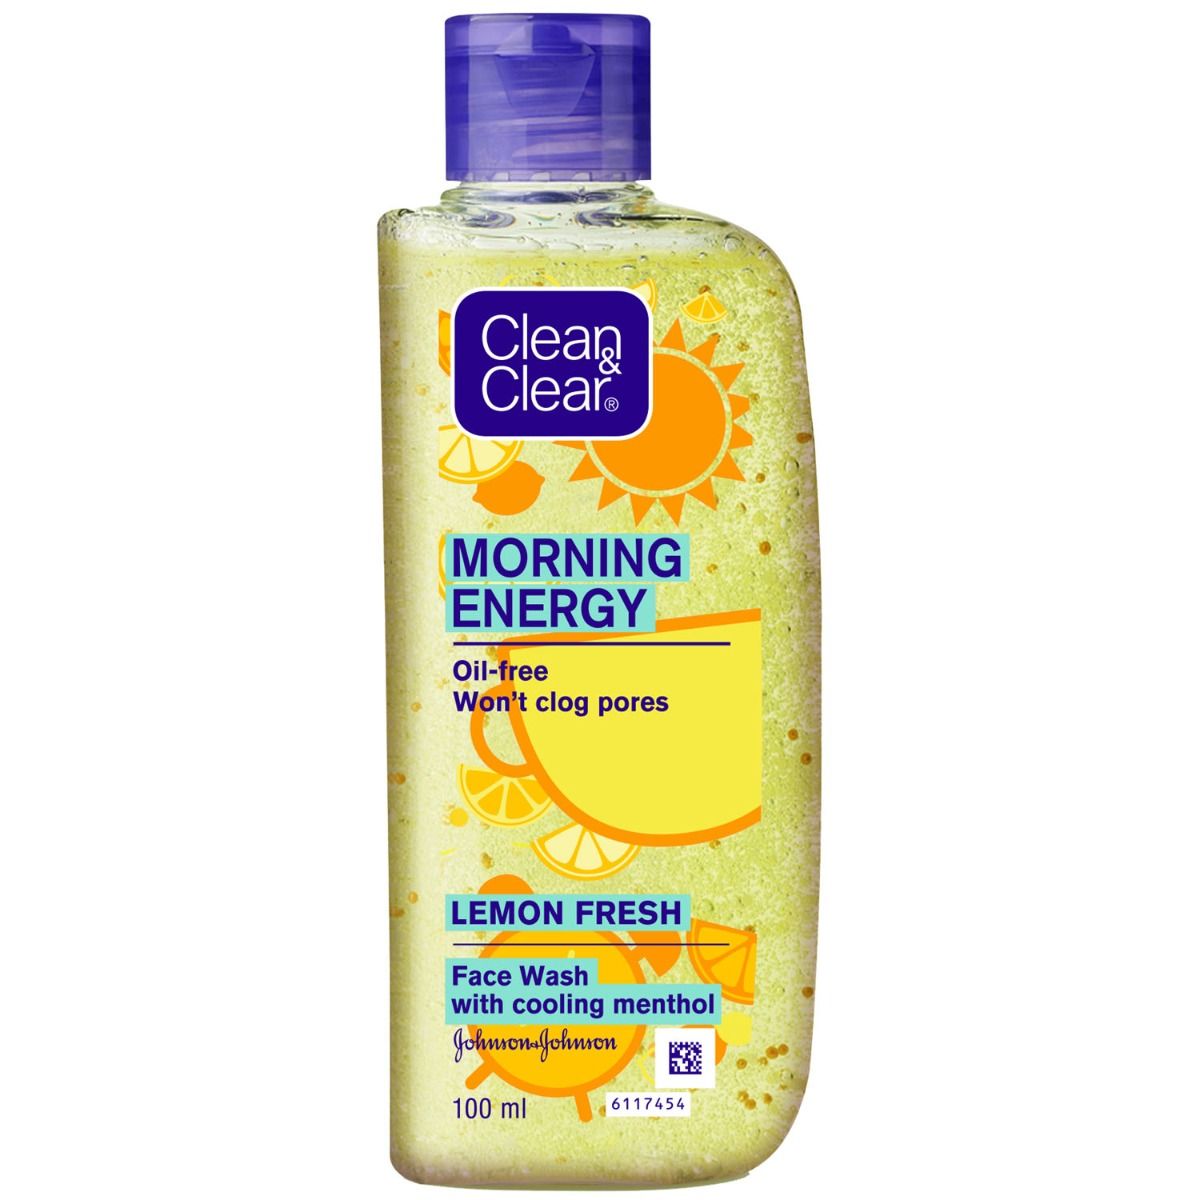 Buy Clean & Clear Morning Energy Oil-Free Lemon Fresh Face Wash, 100 ml Online